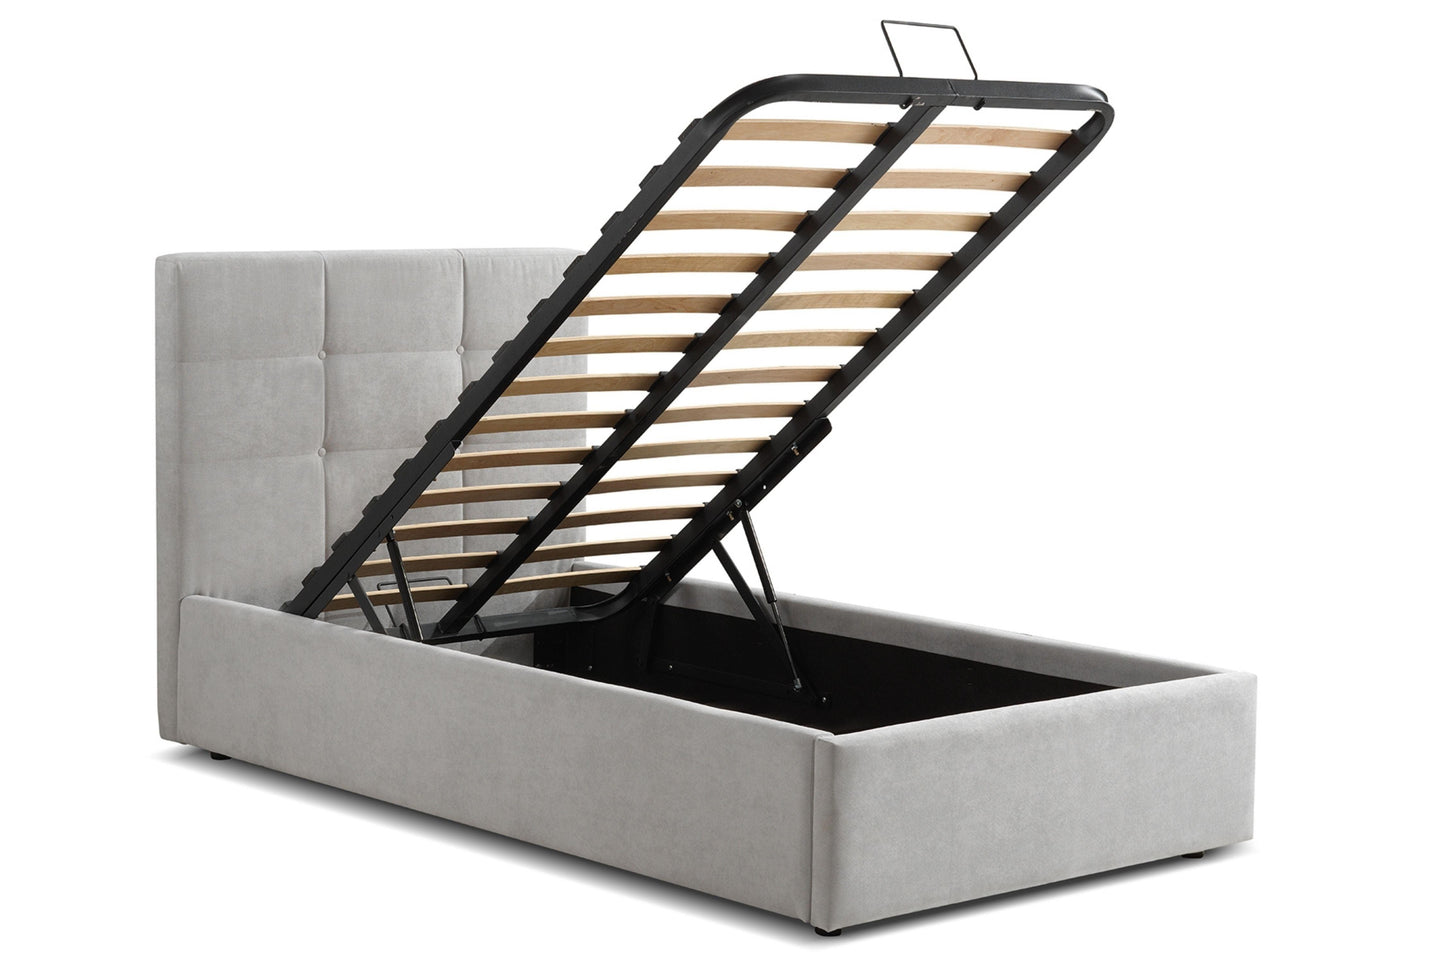 Mario Full, XL Twin Bed Gray Fabric Model CB-A10 - Venini Furniture 